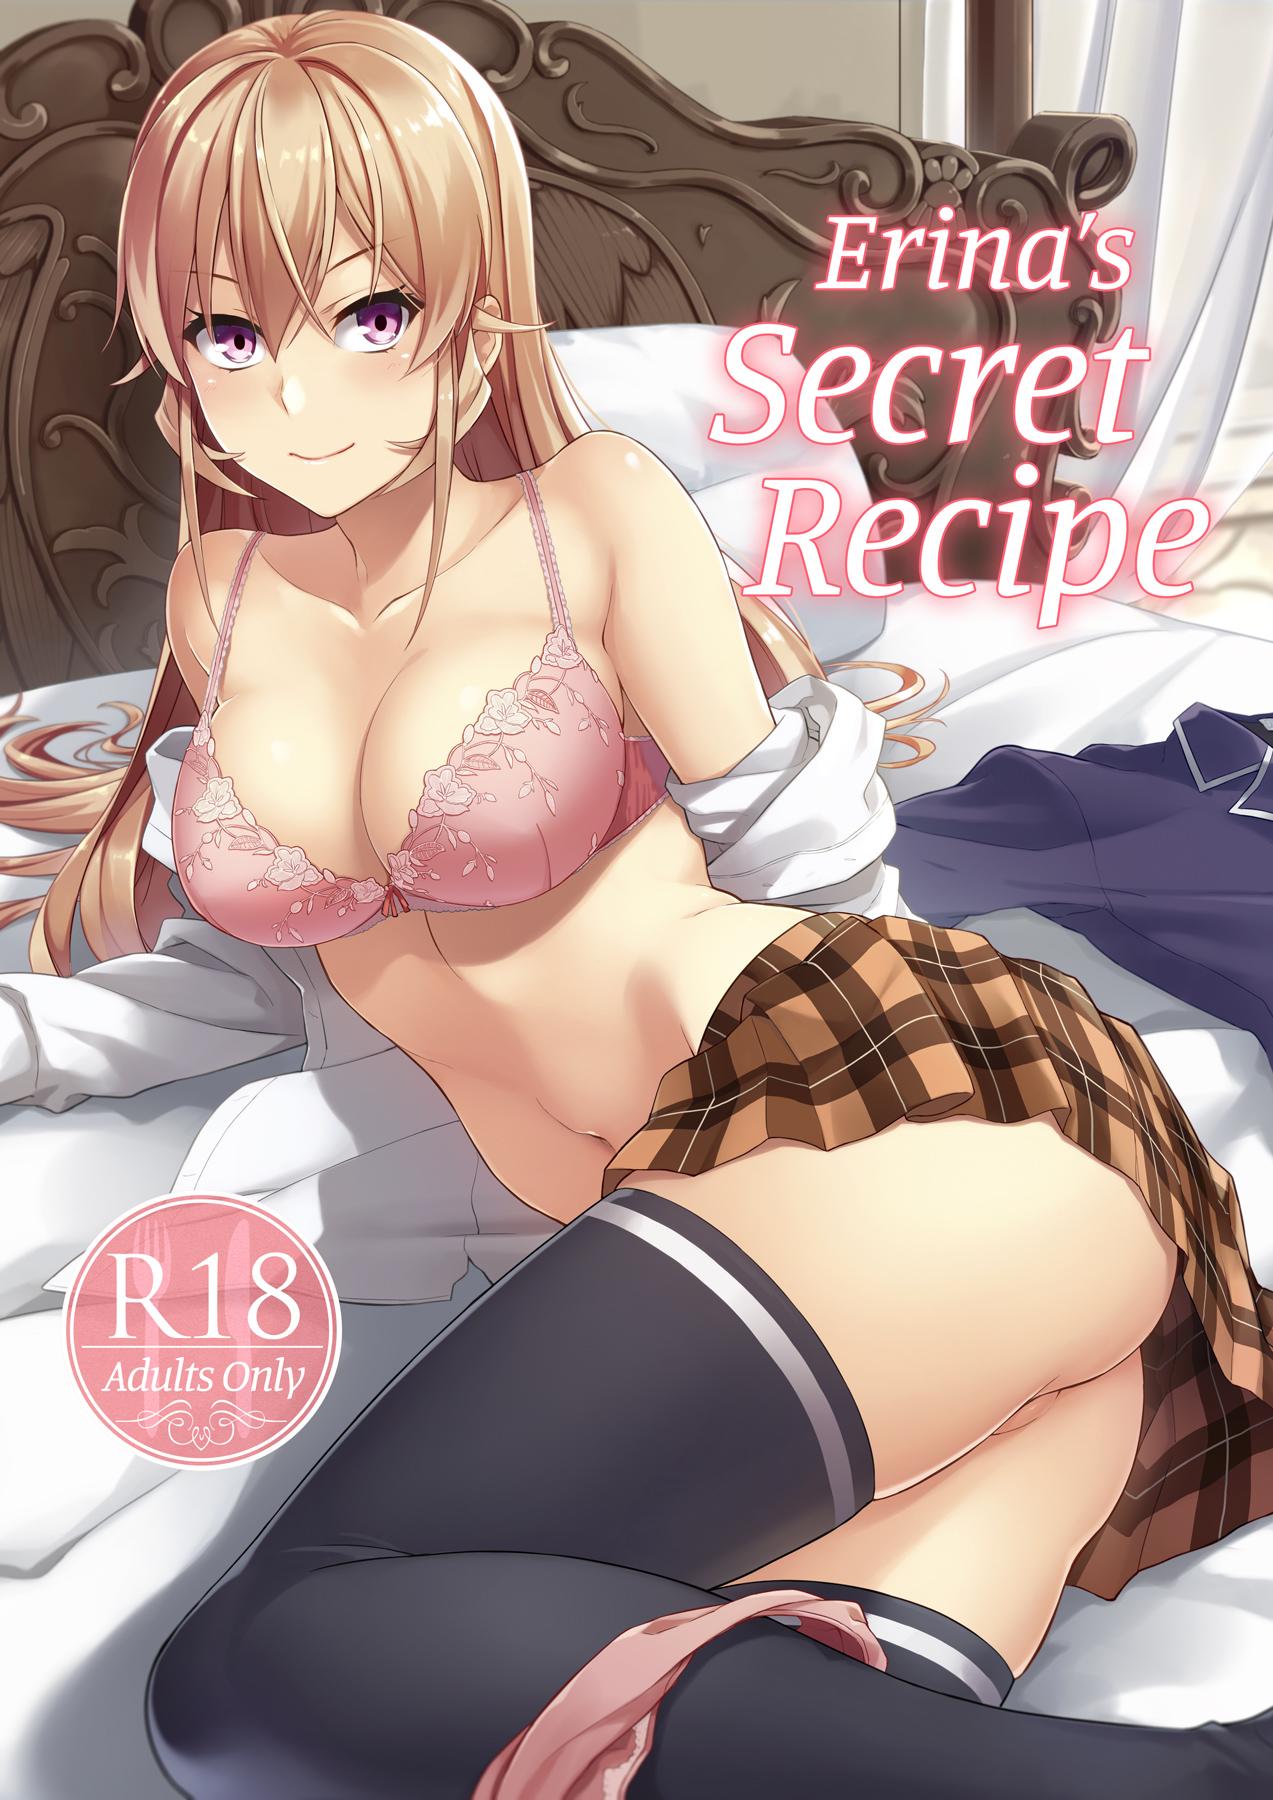 This Erina-sama no Secret Recipe | Erina's Secret Recipe - Shokugeki no soma Bigcock - Picture 1